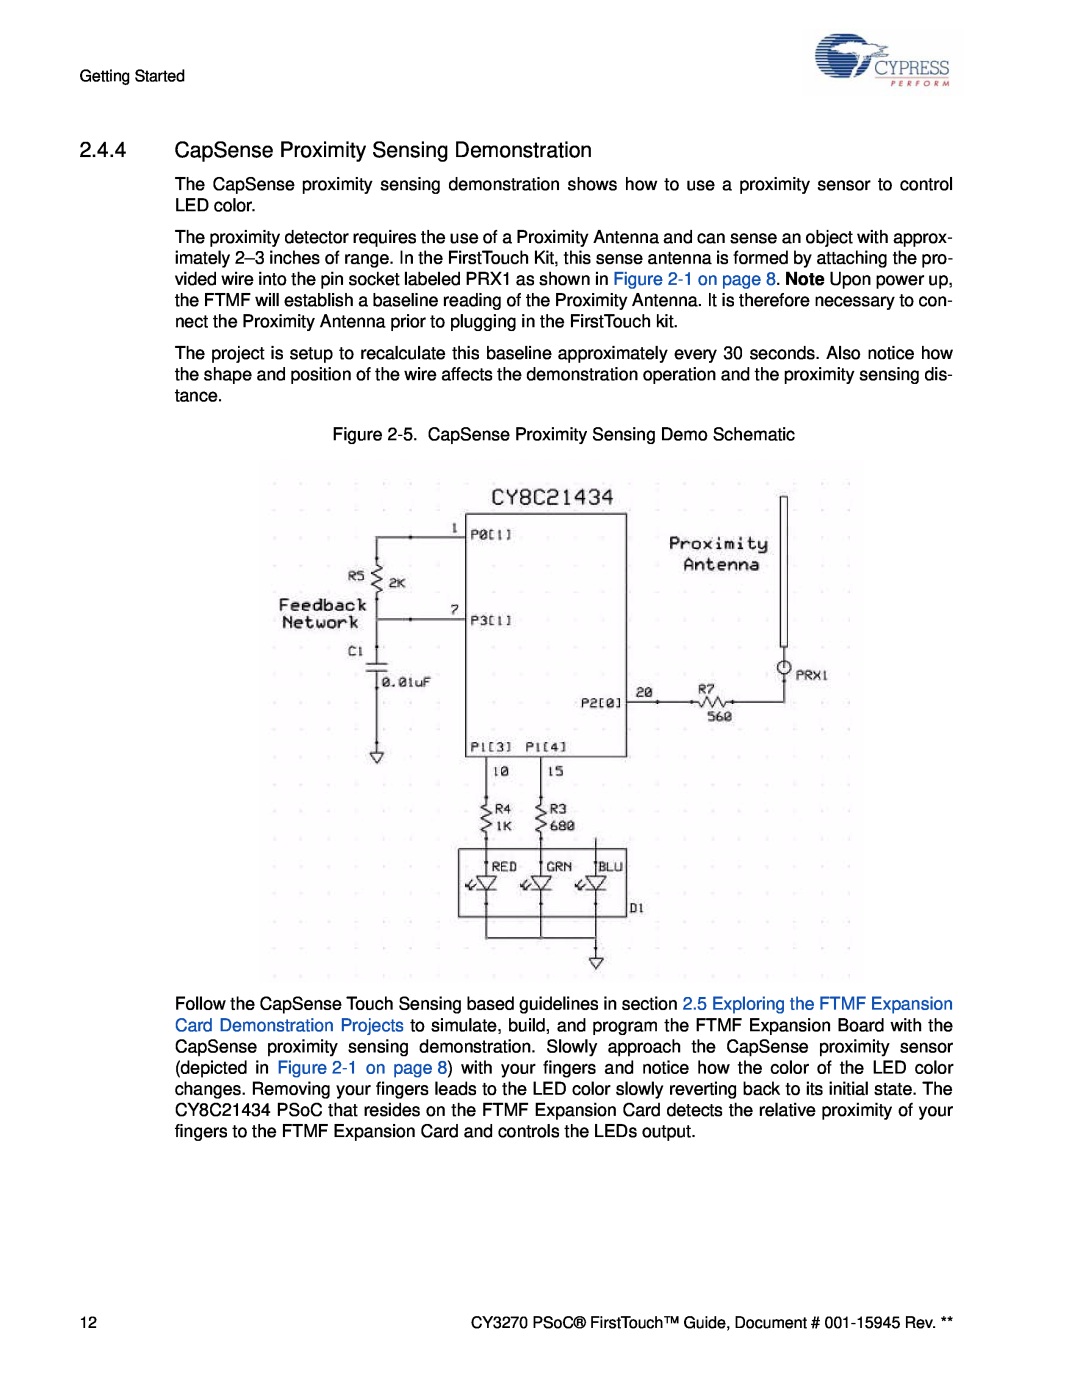 Cypress CY3270 manual CapSense Proximity Sensing Demonstration 